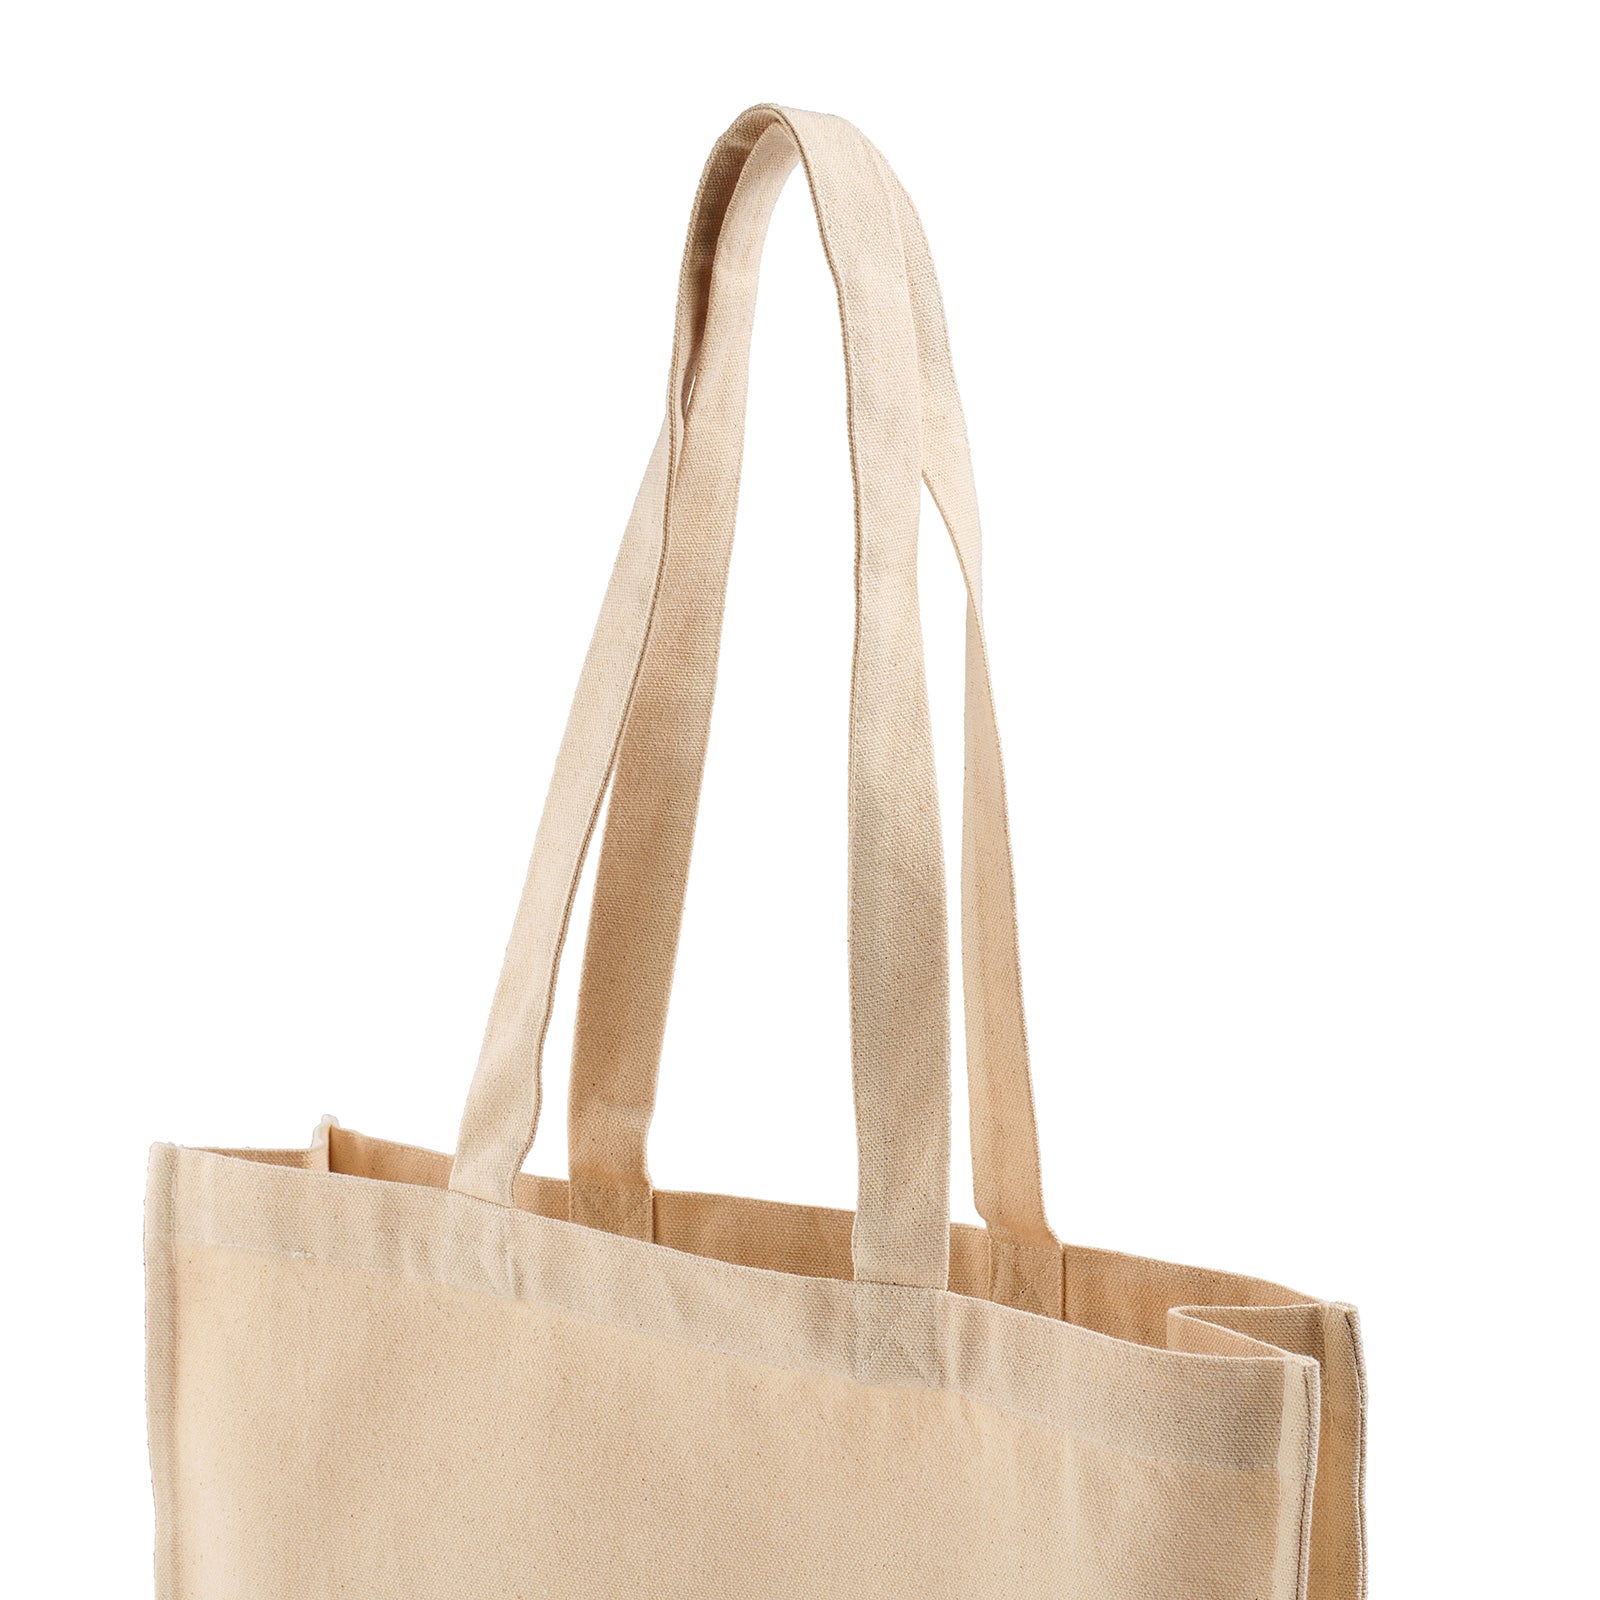 The Merchant Fox Ecru Tote Shopper Bag